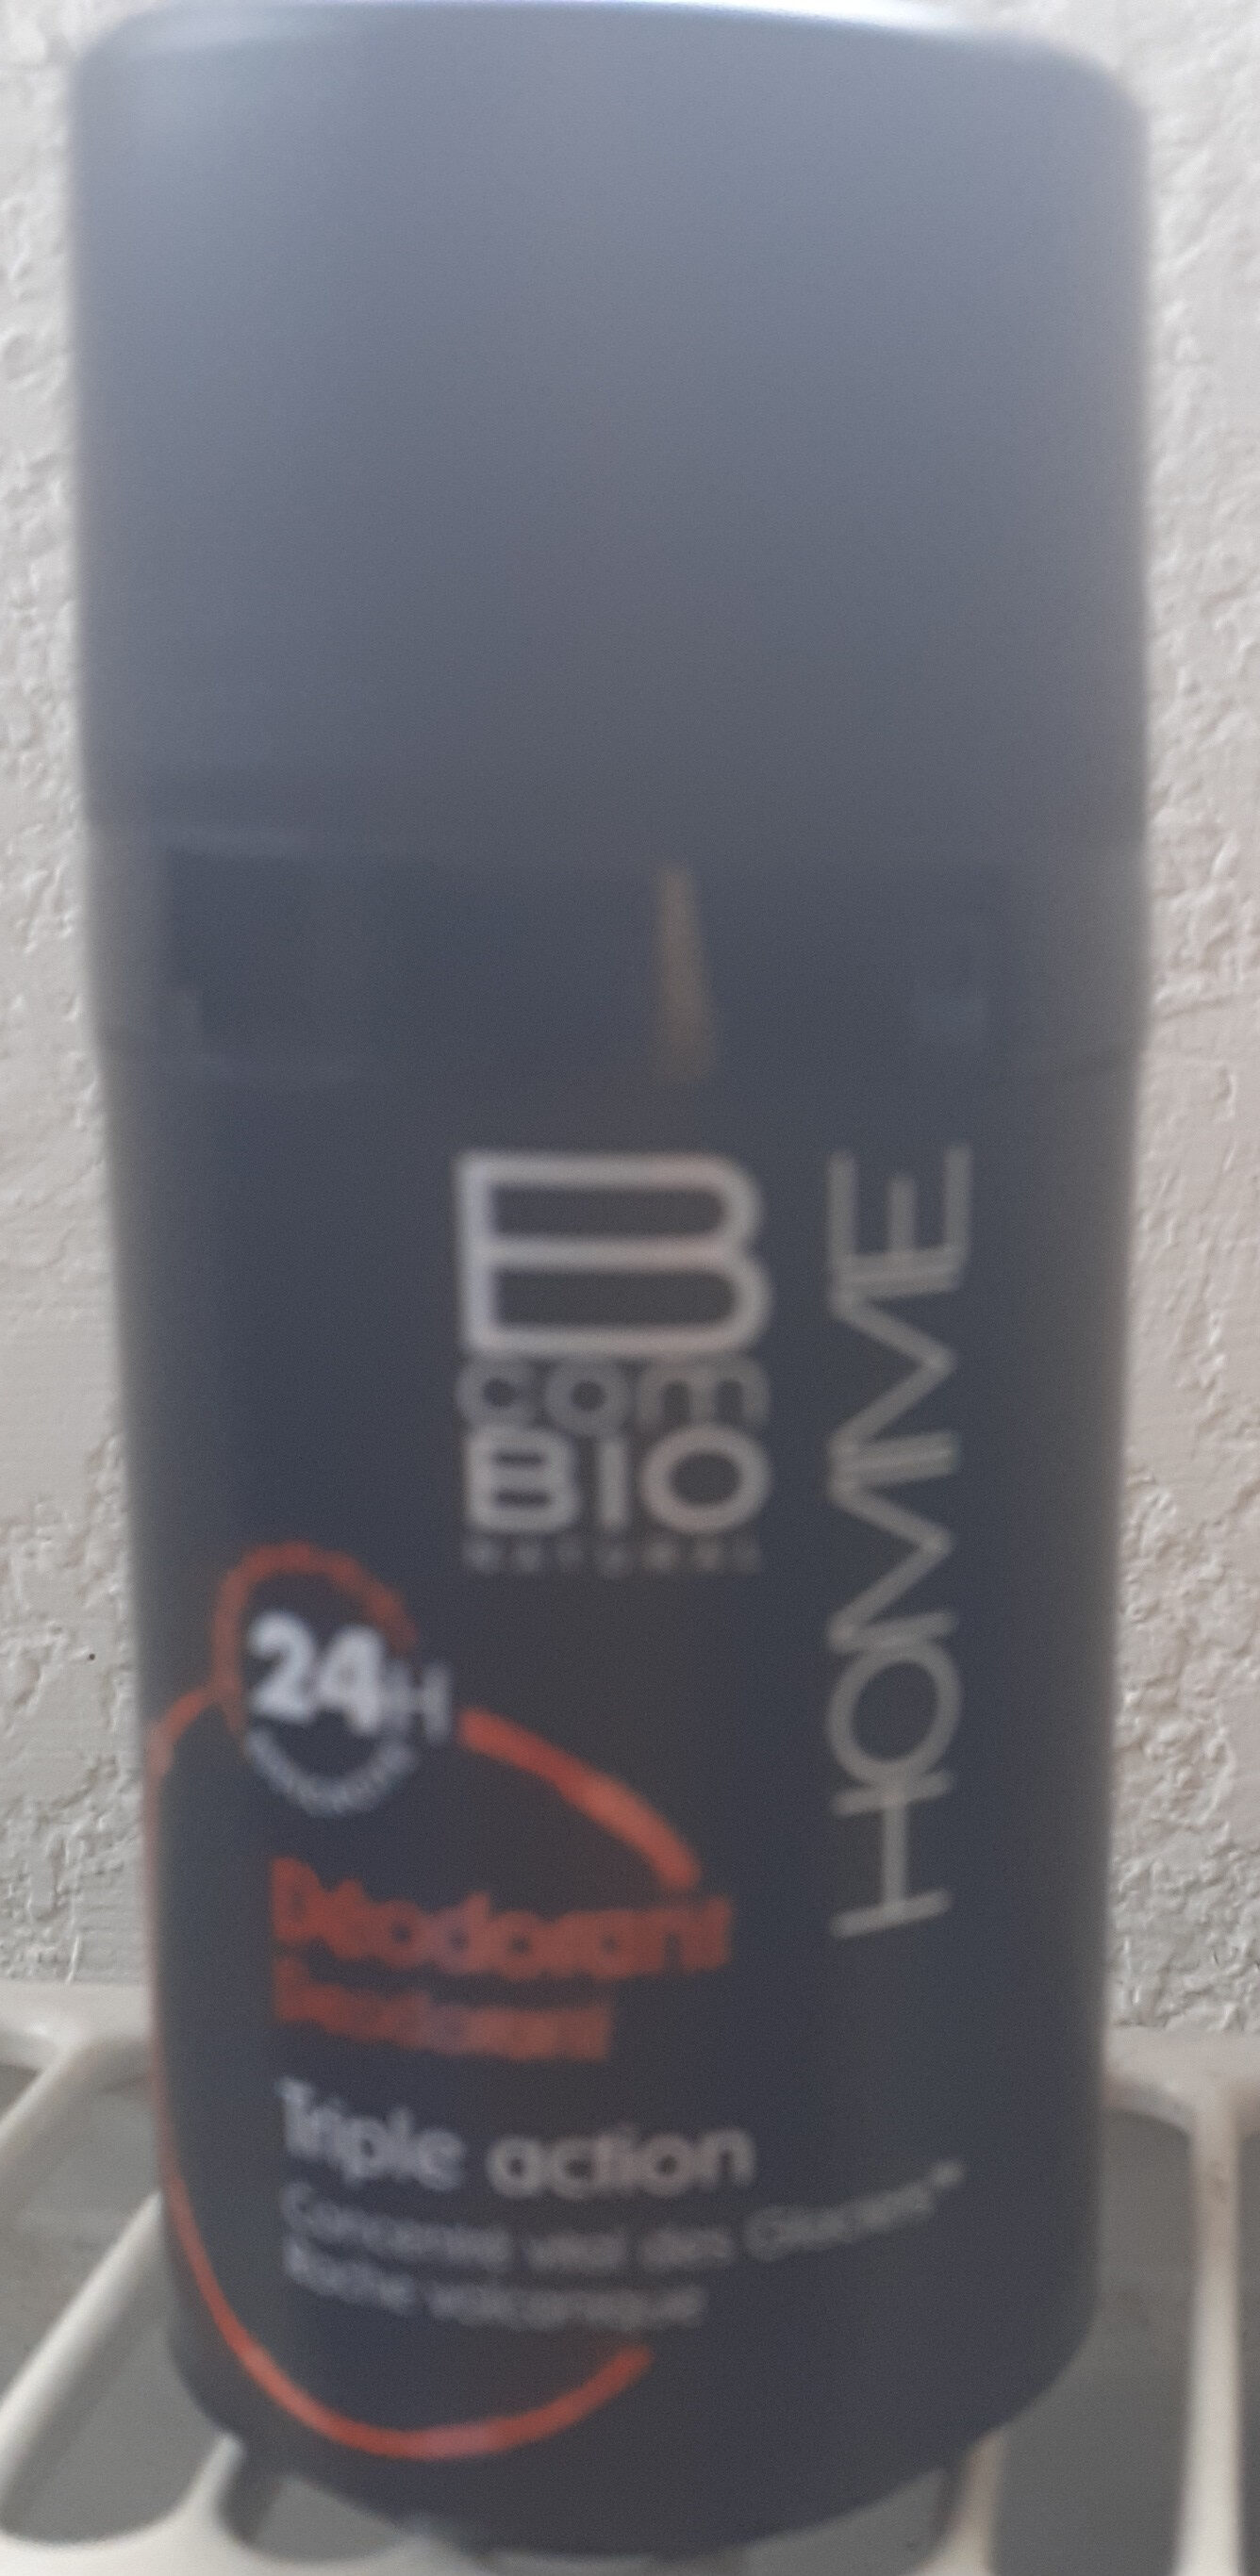 B com bio natural homme - Product - fr